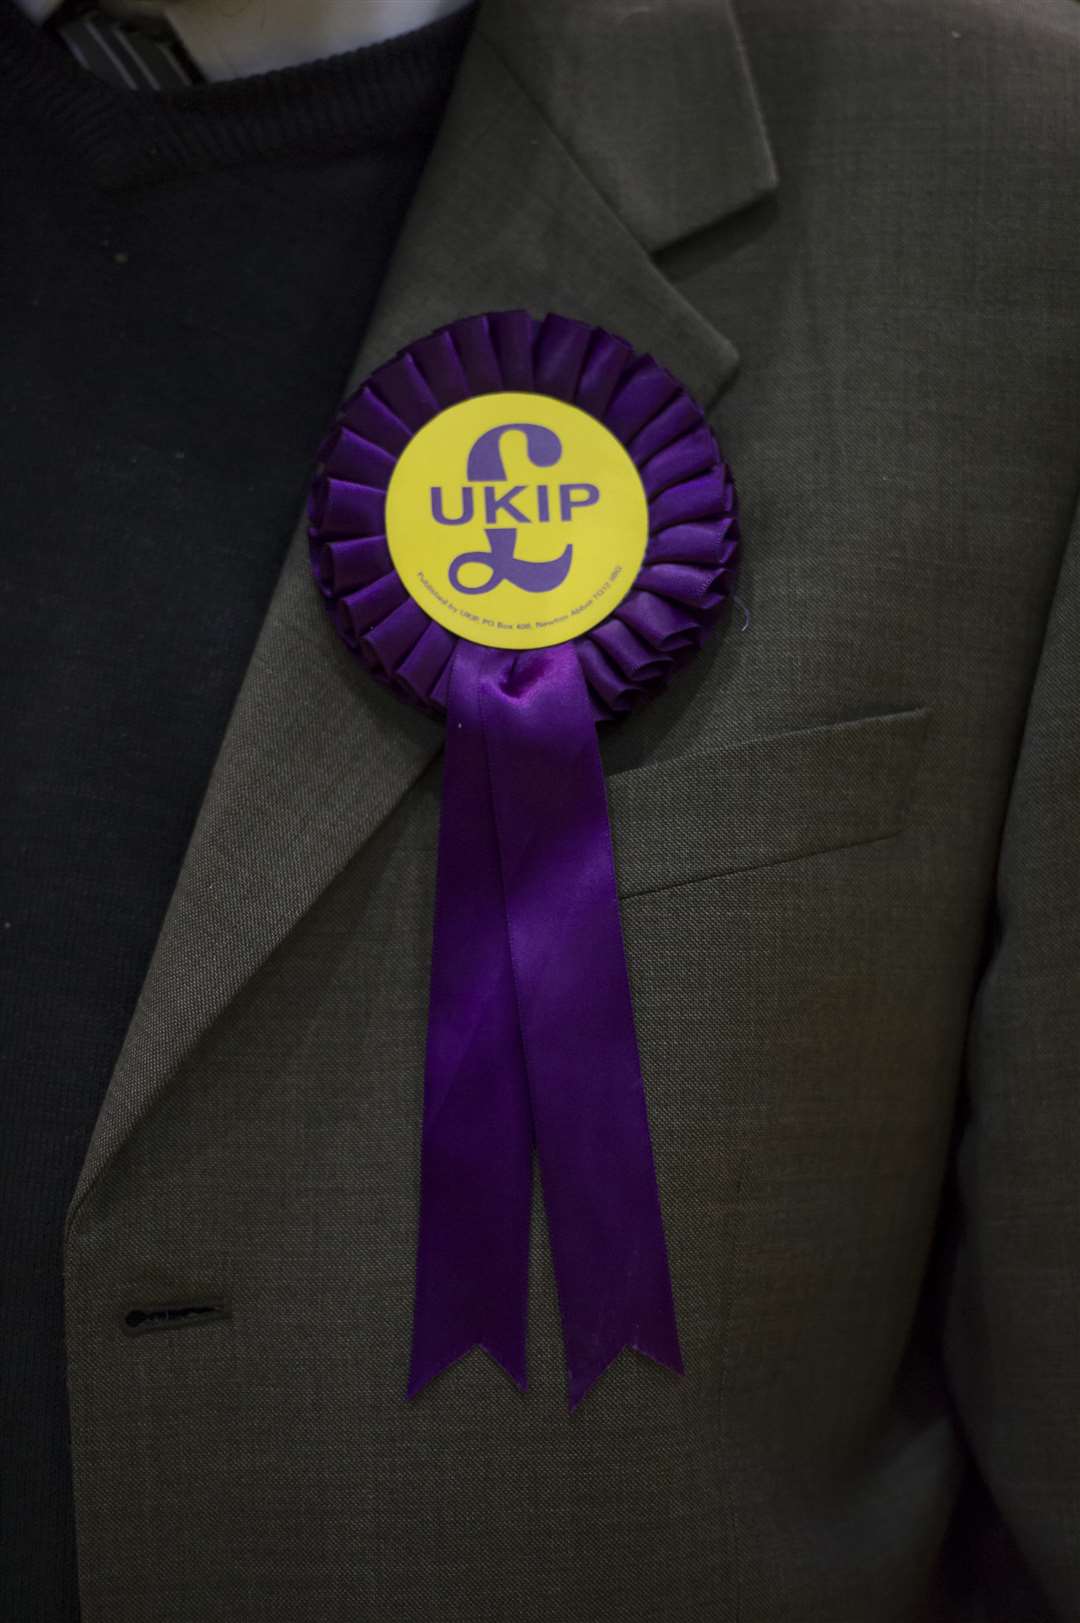 Ukip won four seats on Medway Council